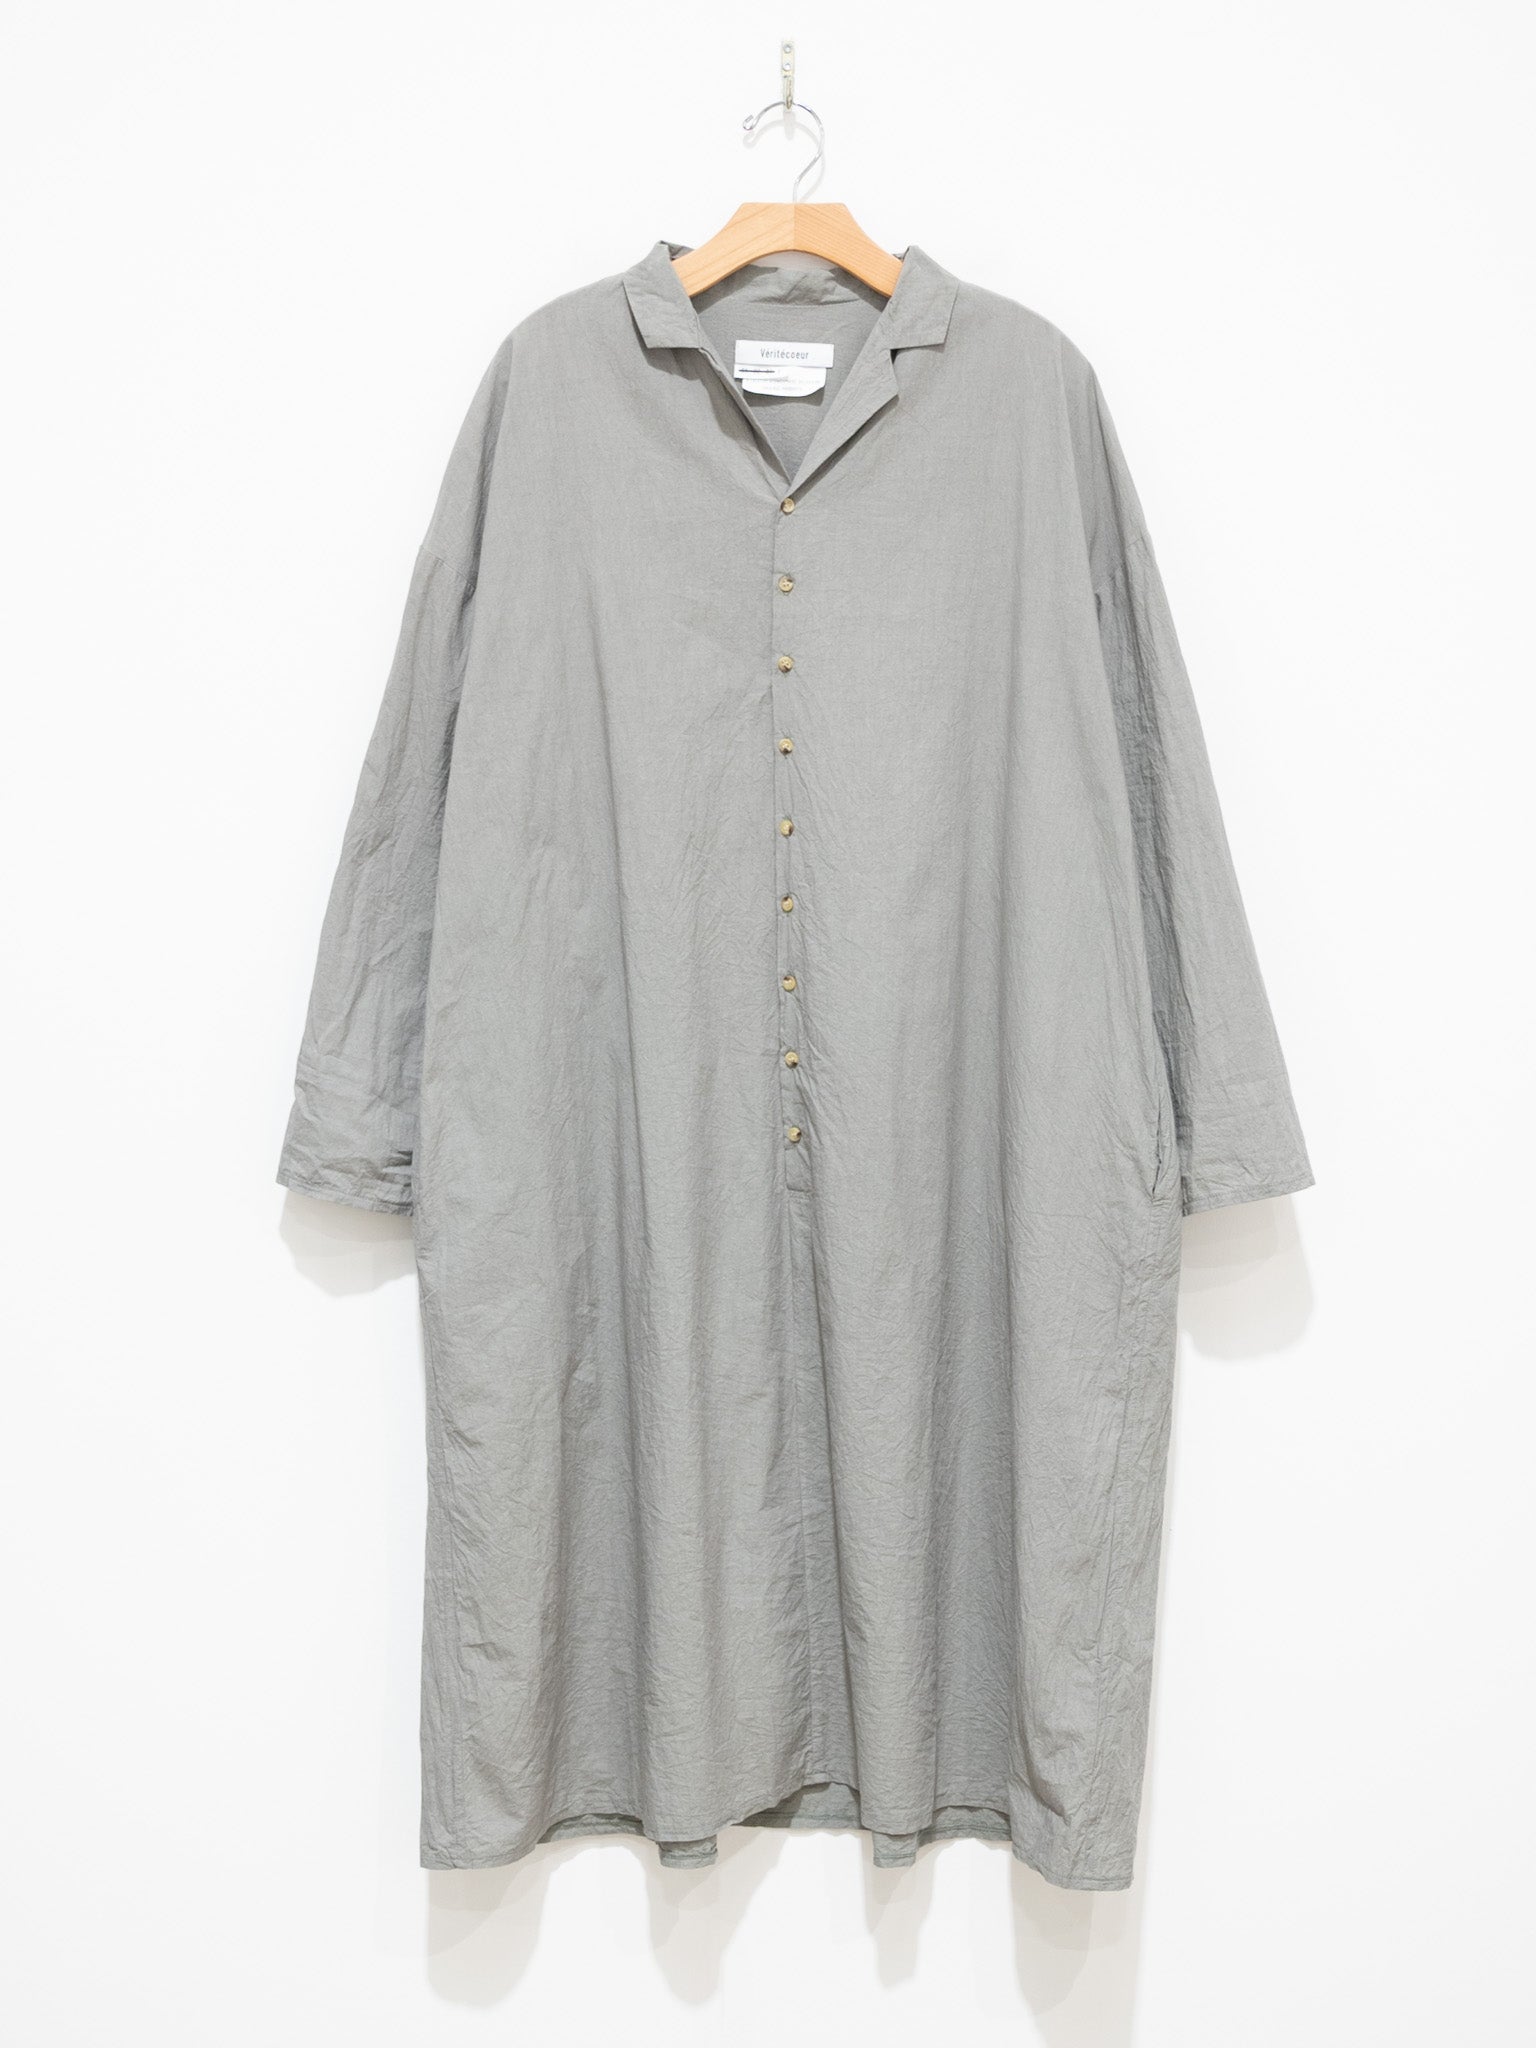 Namu Shop - Veritecoeur Tailored Collar Dress - Gray